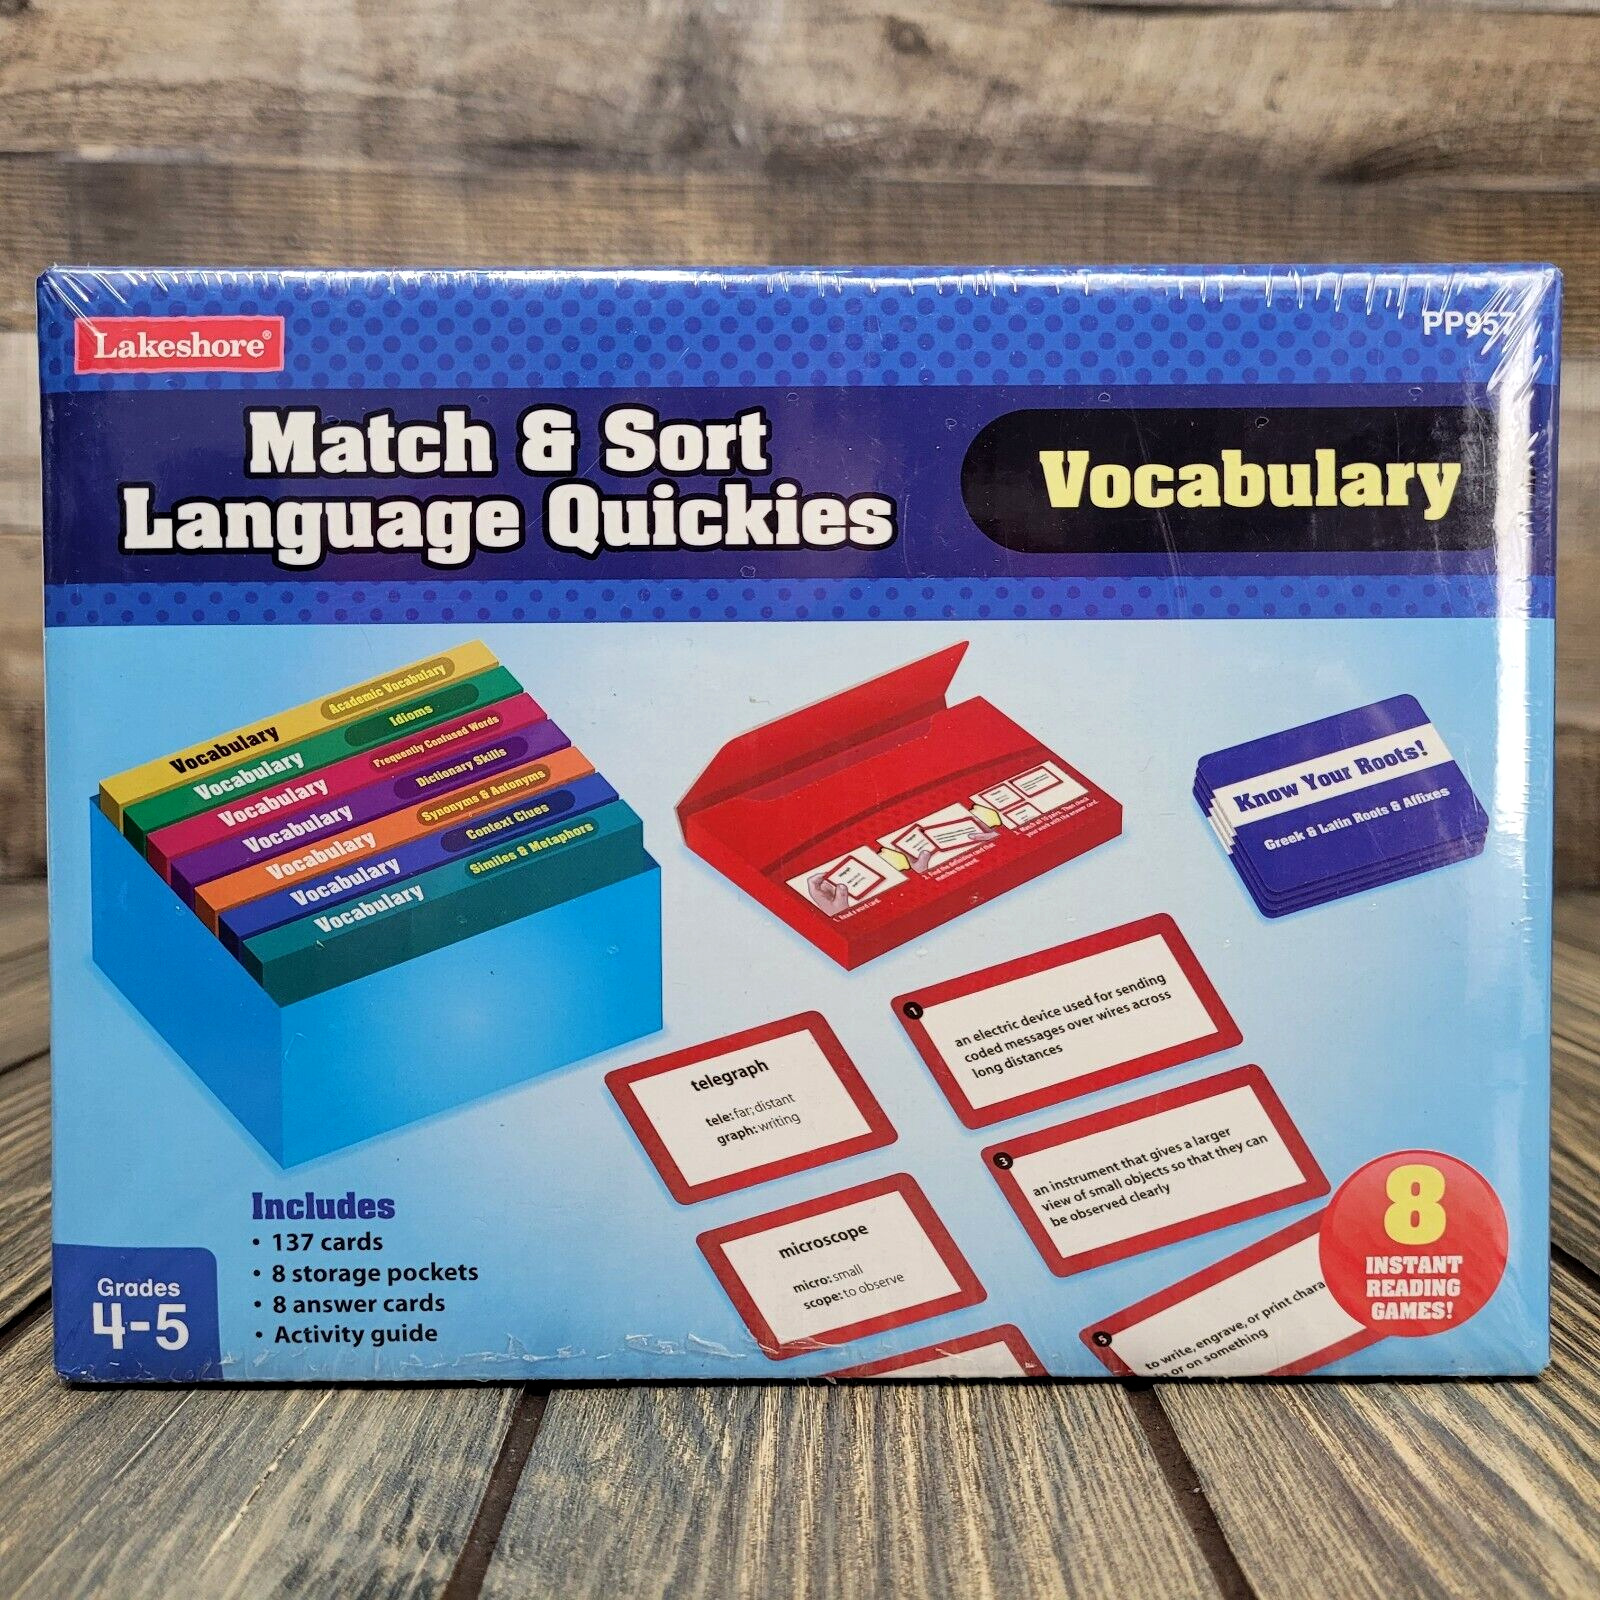 Grades 4-5 Match & Sort Language Quickies Vocabulary,  8 Games Lakeshore PP957